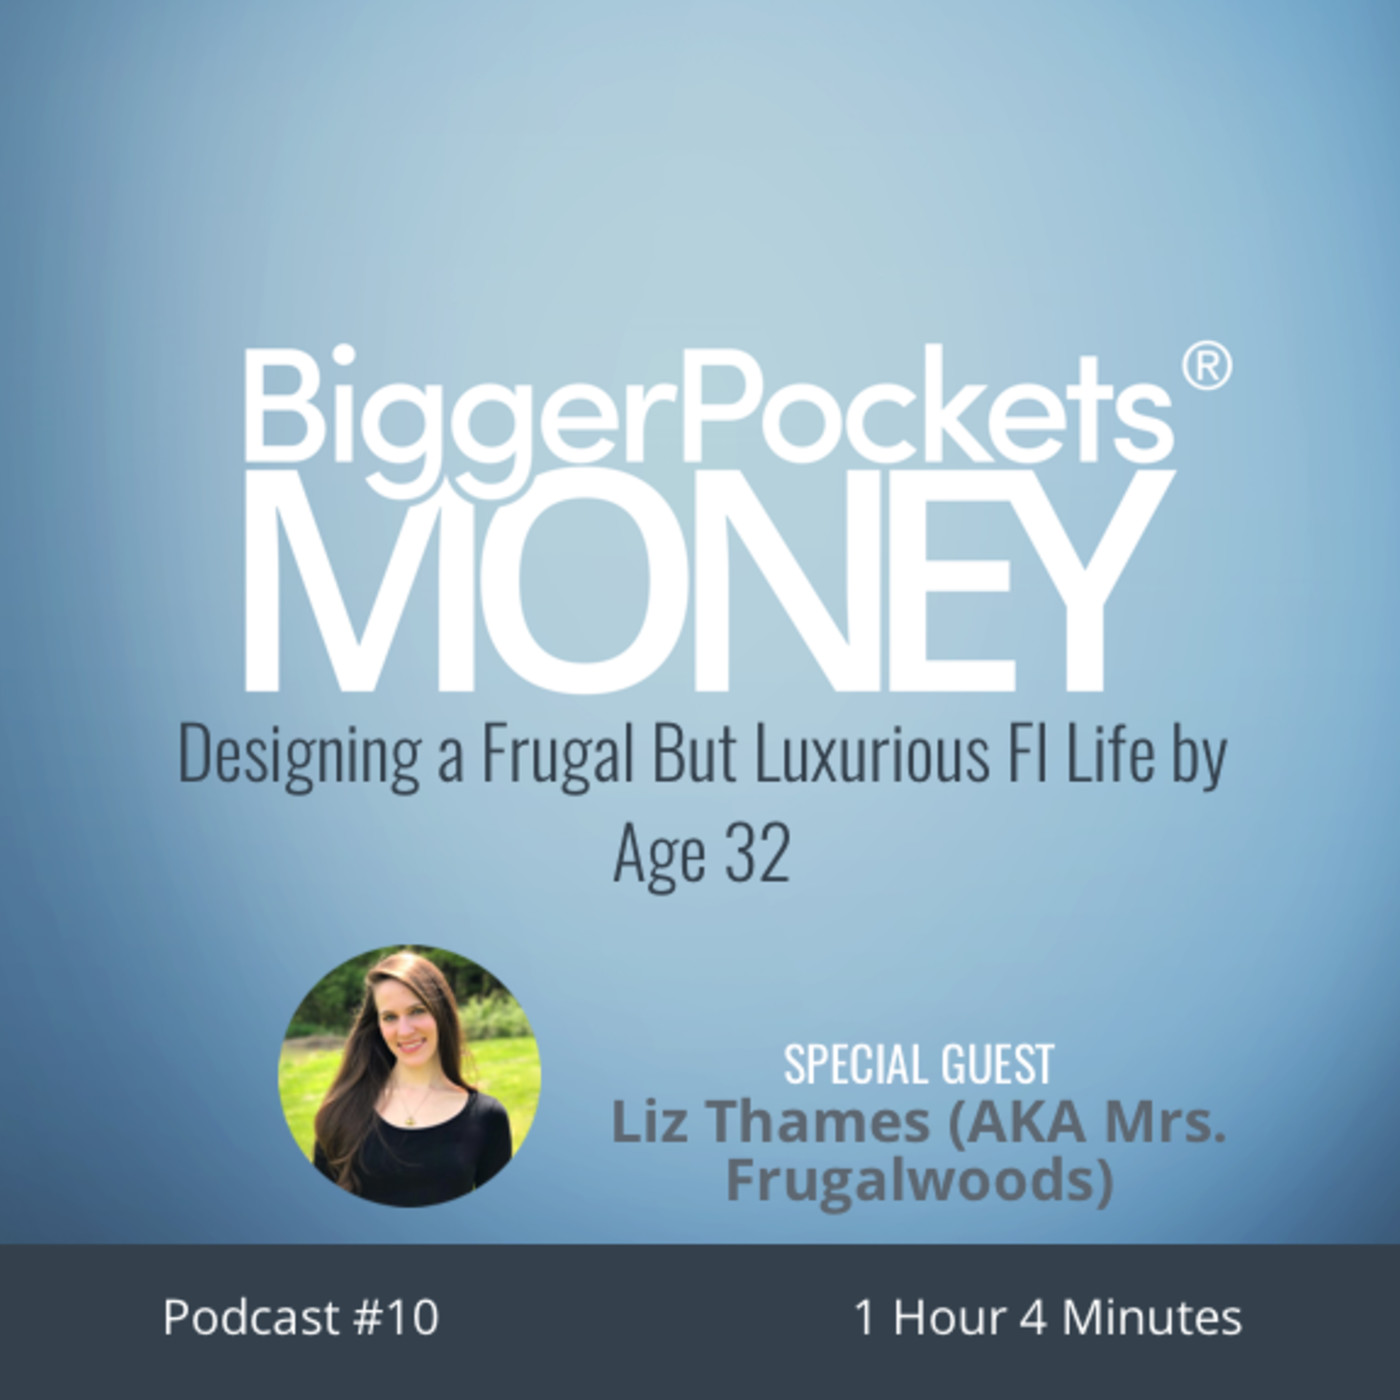 BiggerPockets Money Podcast Reviews